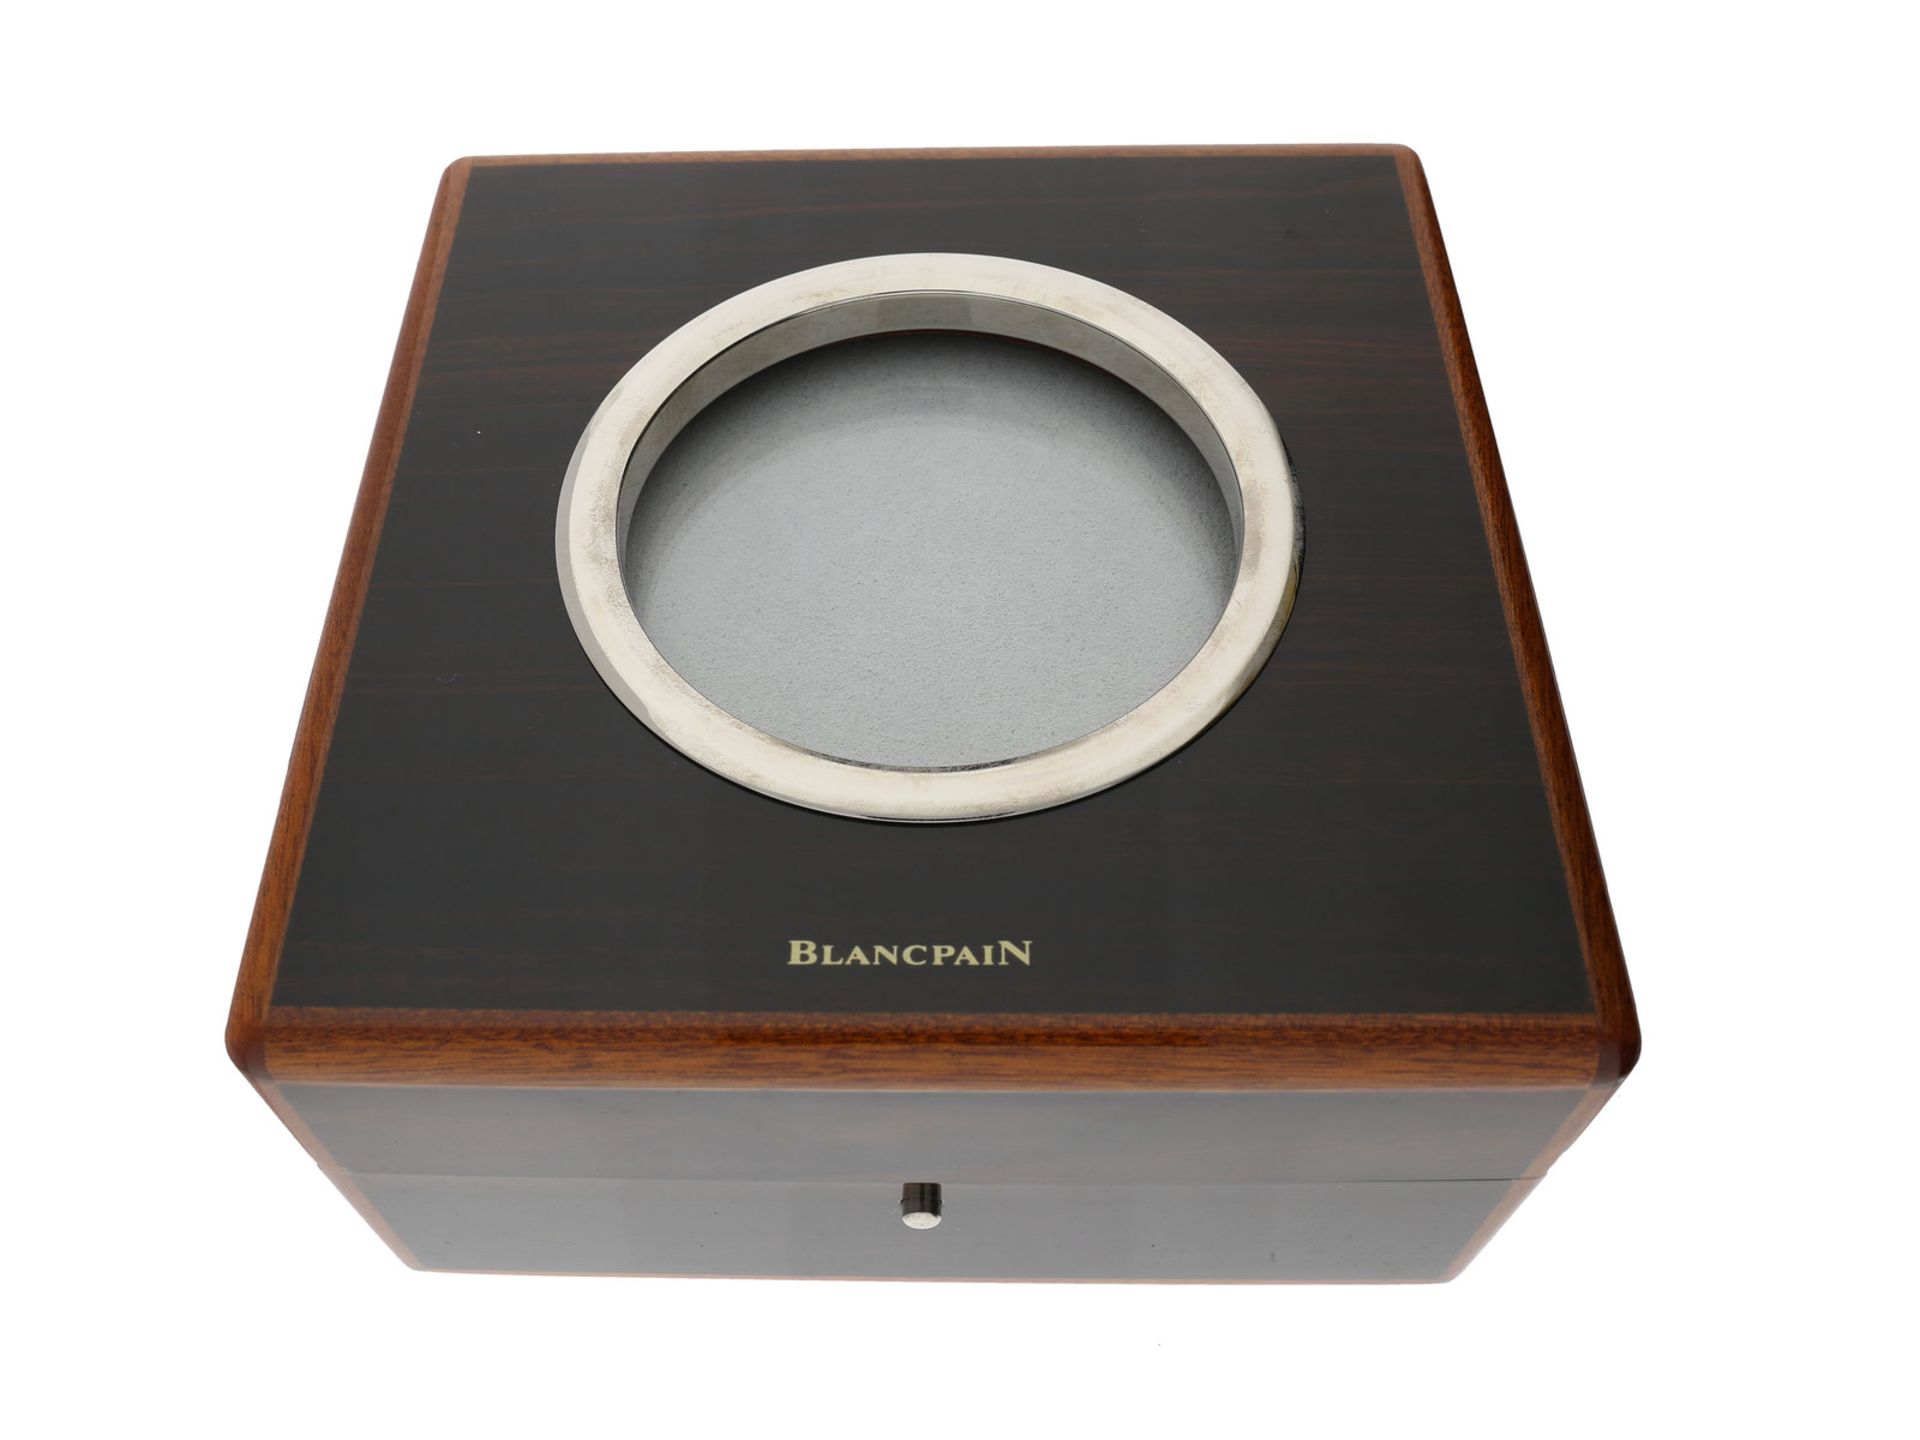 Uhrenbox: hochwertige, neuwertige Edelholz Armbanduhren-Box, original Blancpain Limited Edition, - Bild 2 aus 3